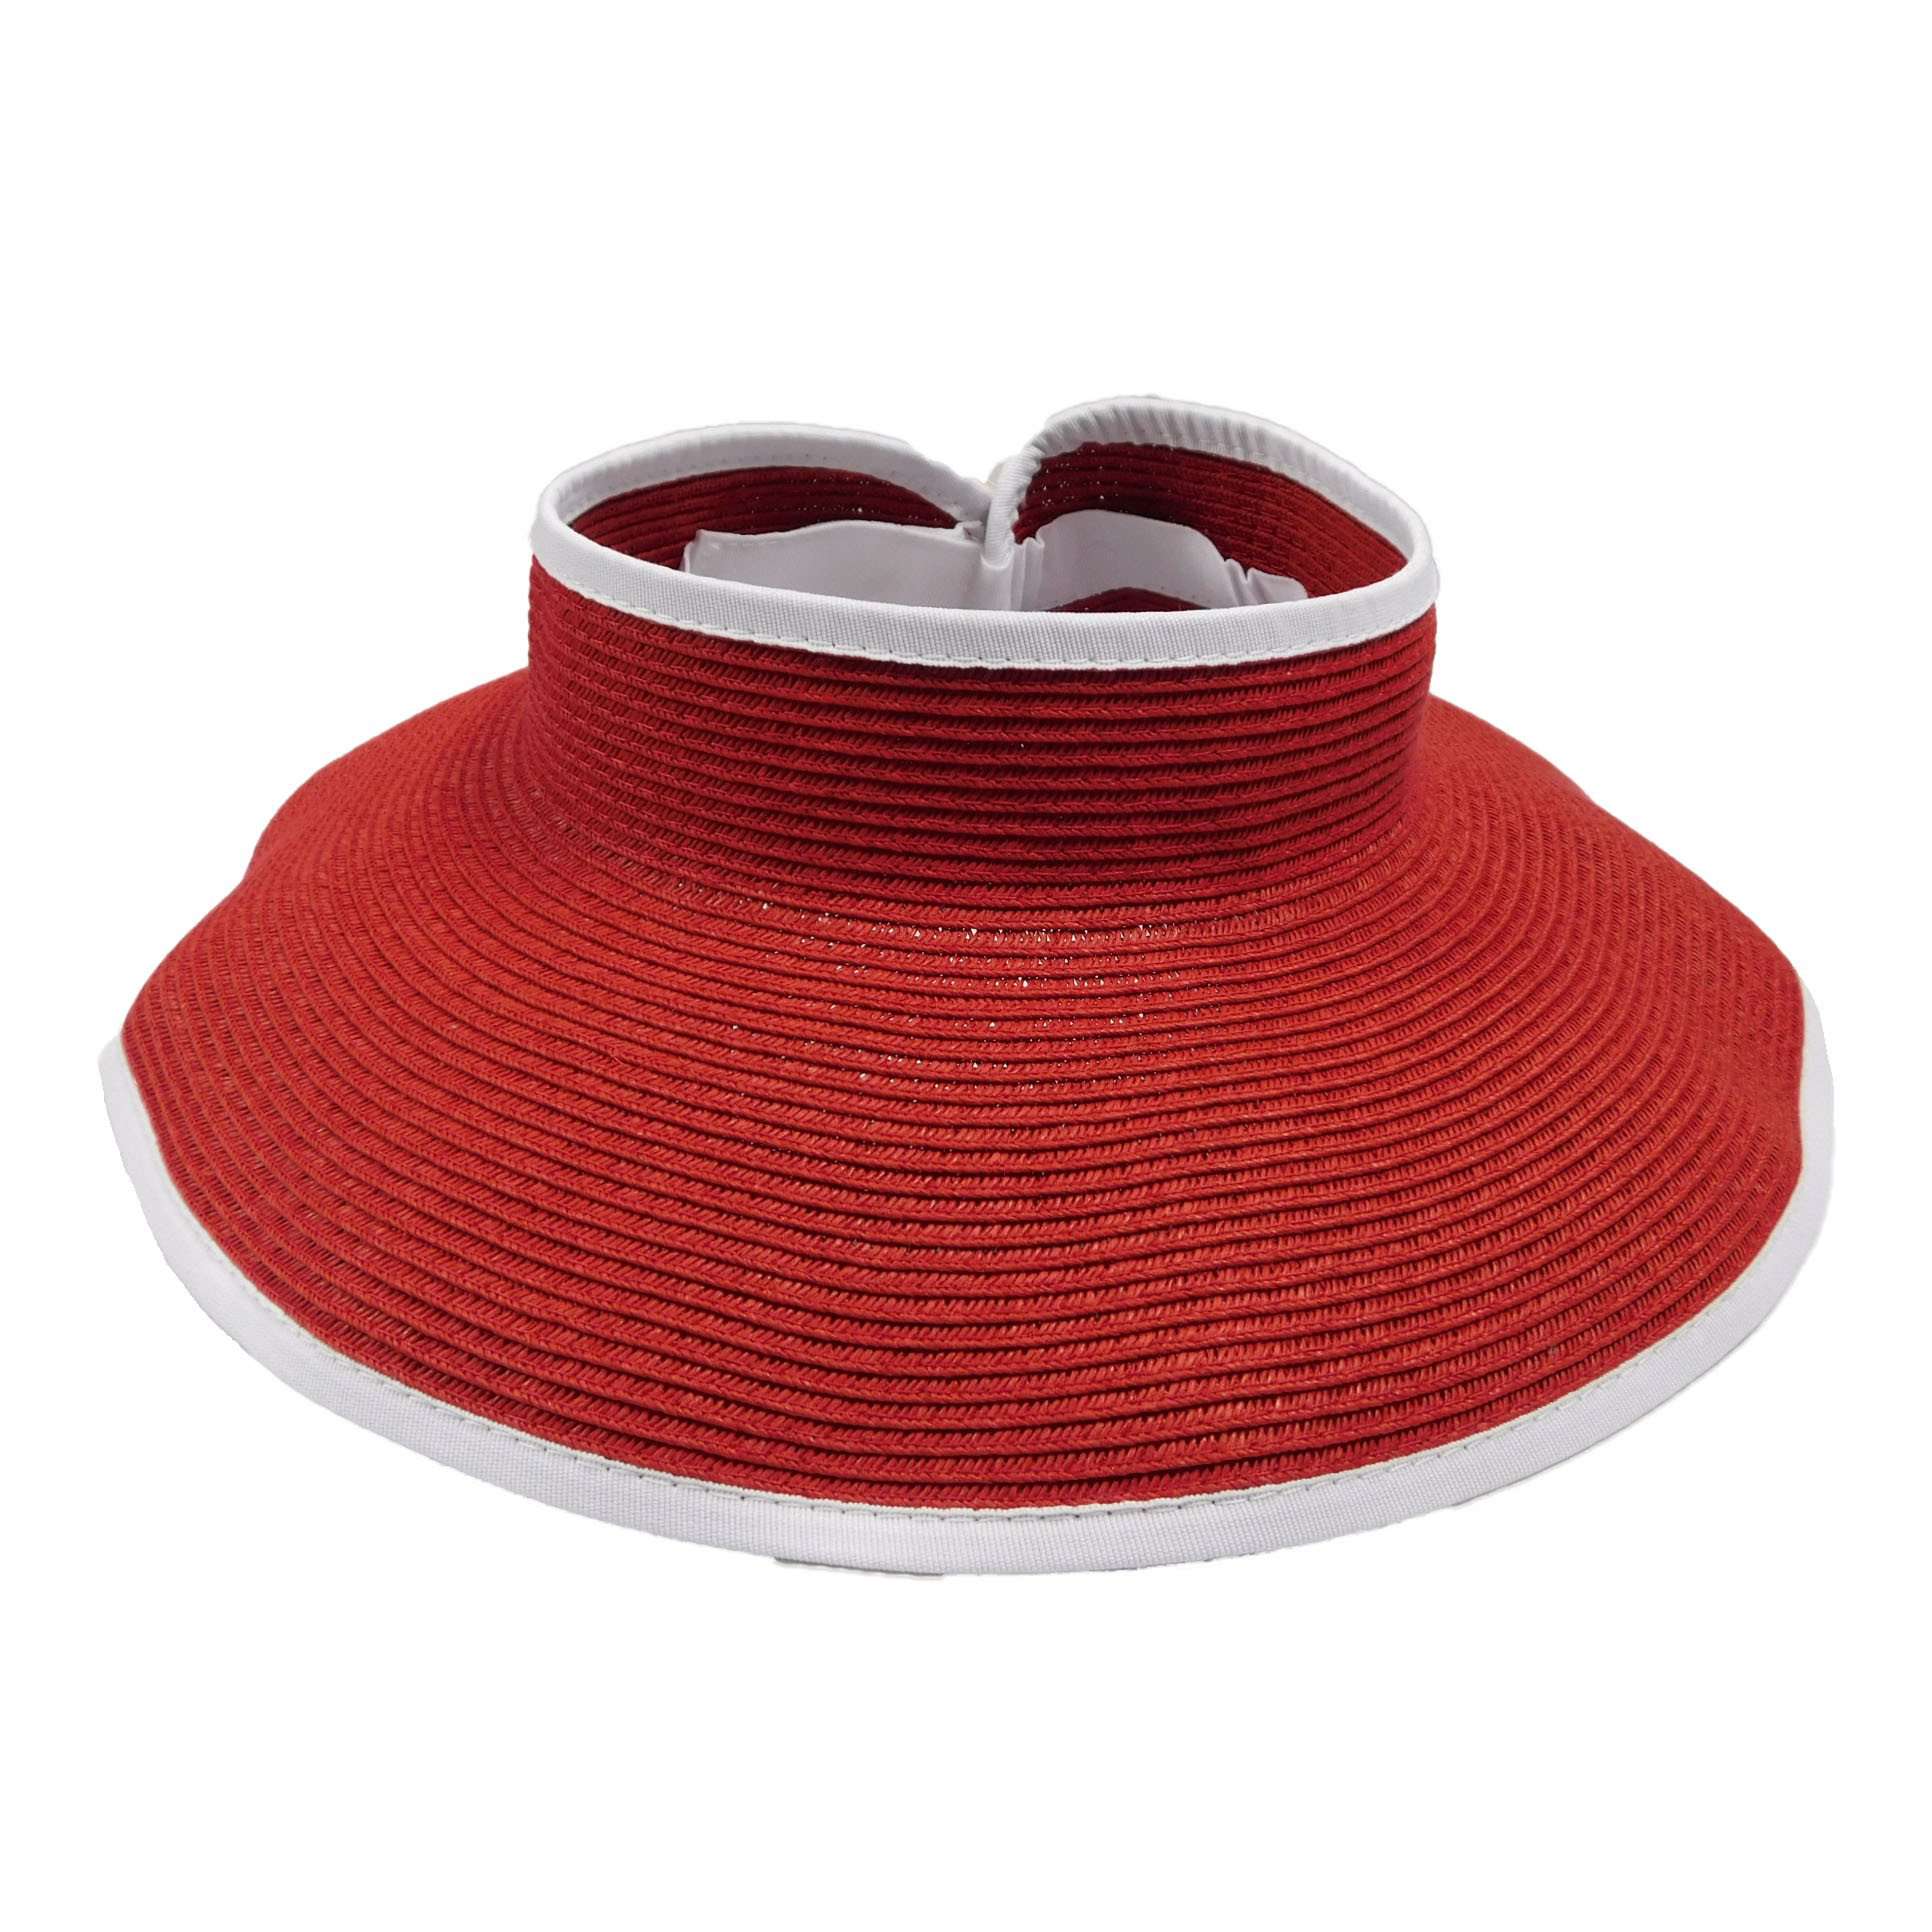 Wrap Around Sun Visor Hat with Contrast Trim by Boardwalk Visor Cap Boardwalk Style Hats da148-1rd Red  